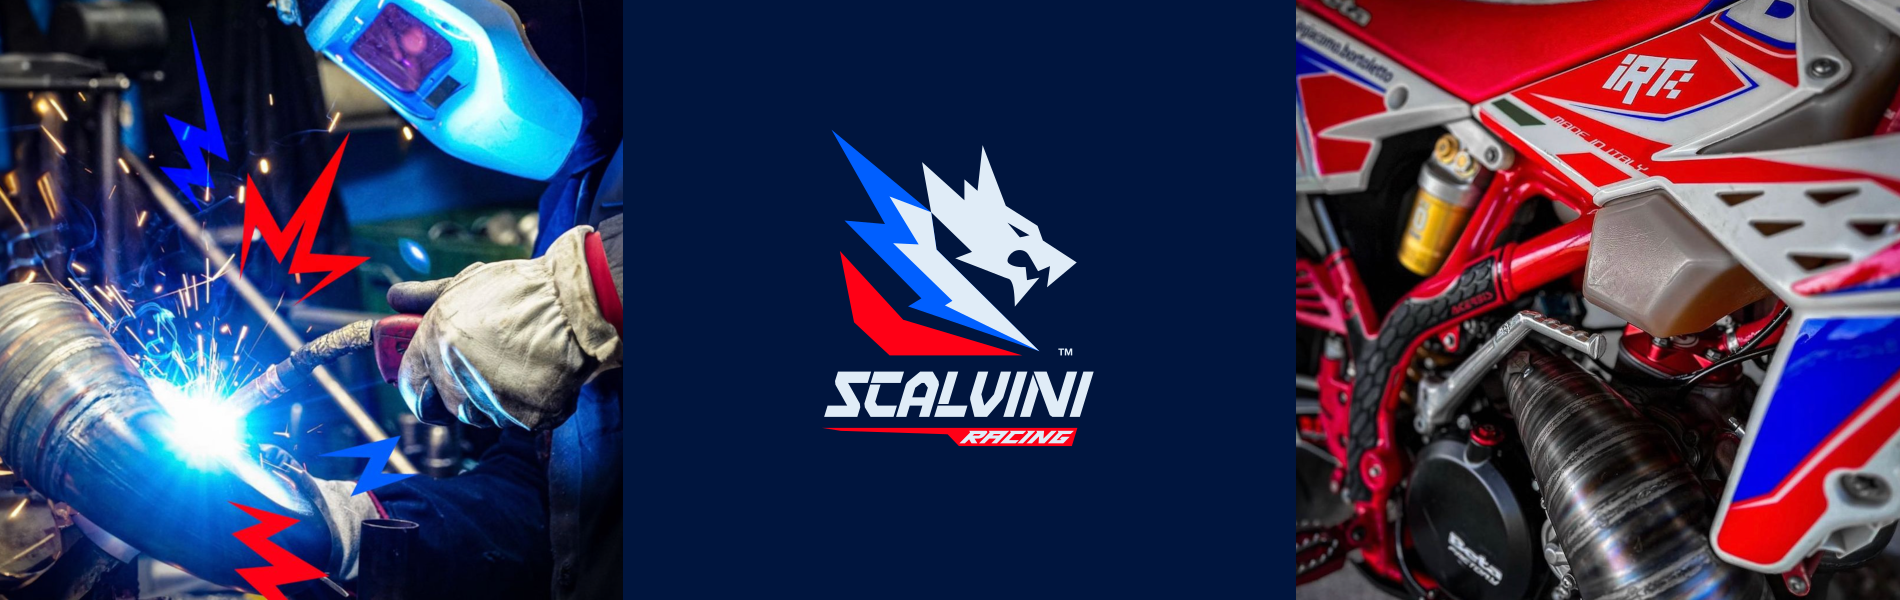 Scalvini banner desktop